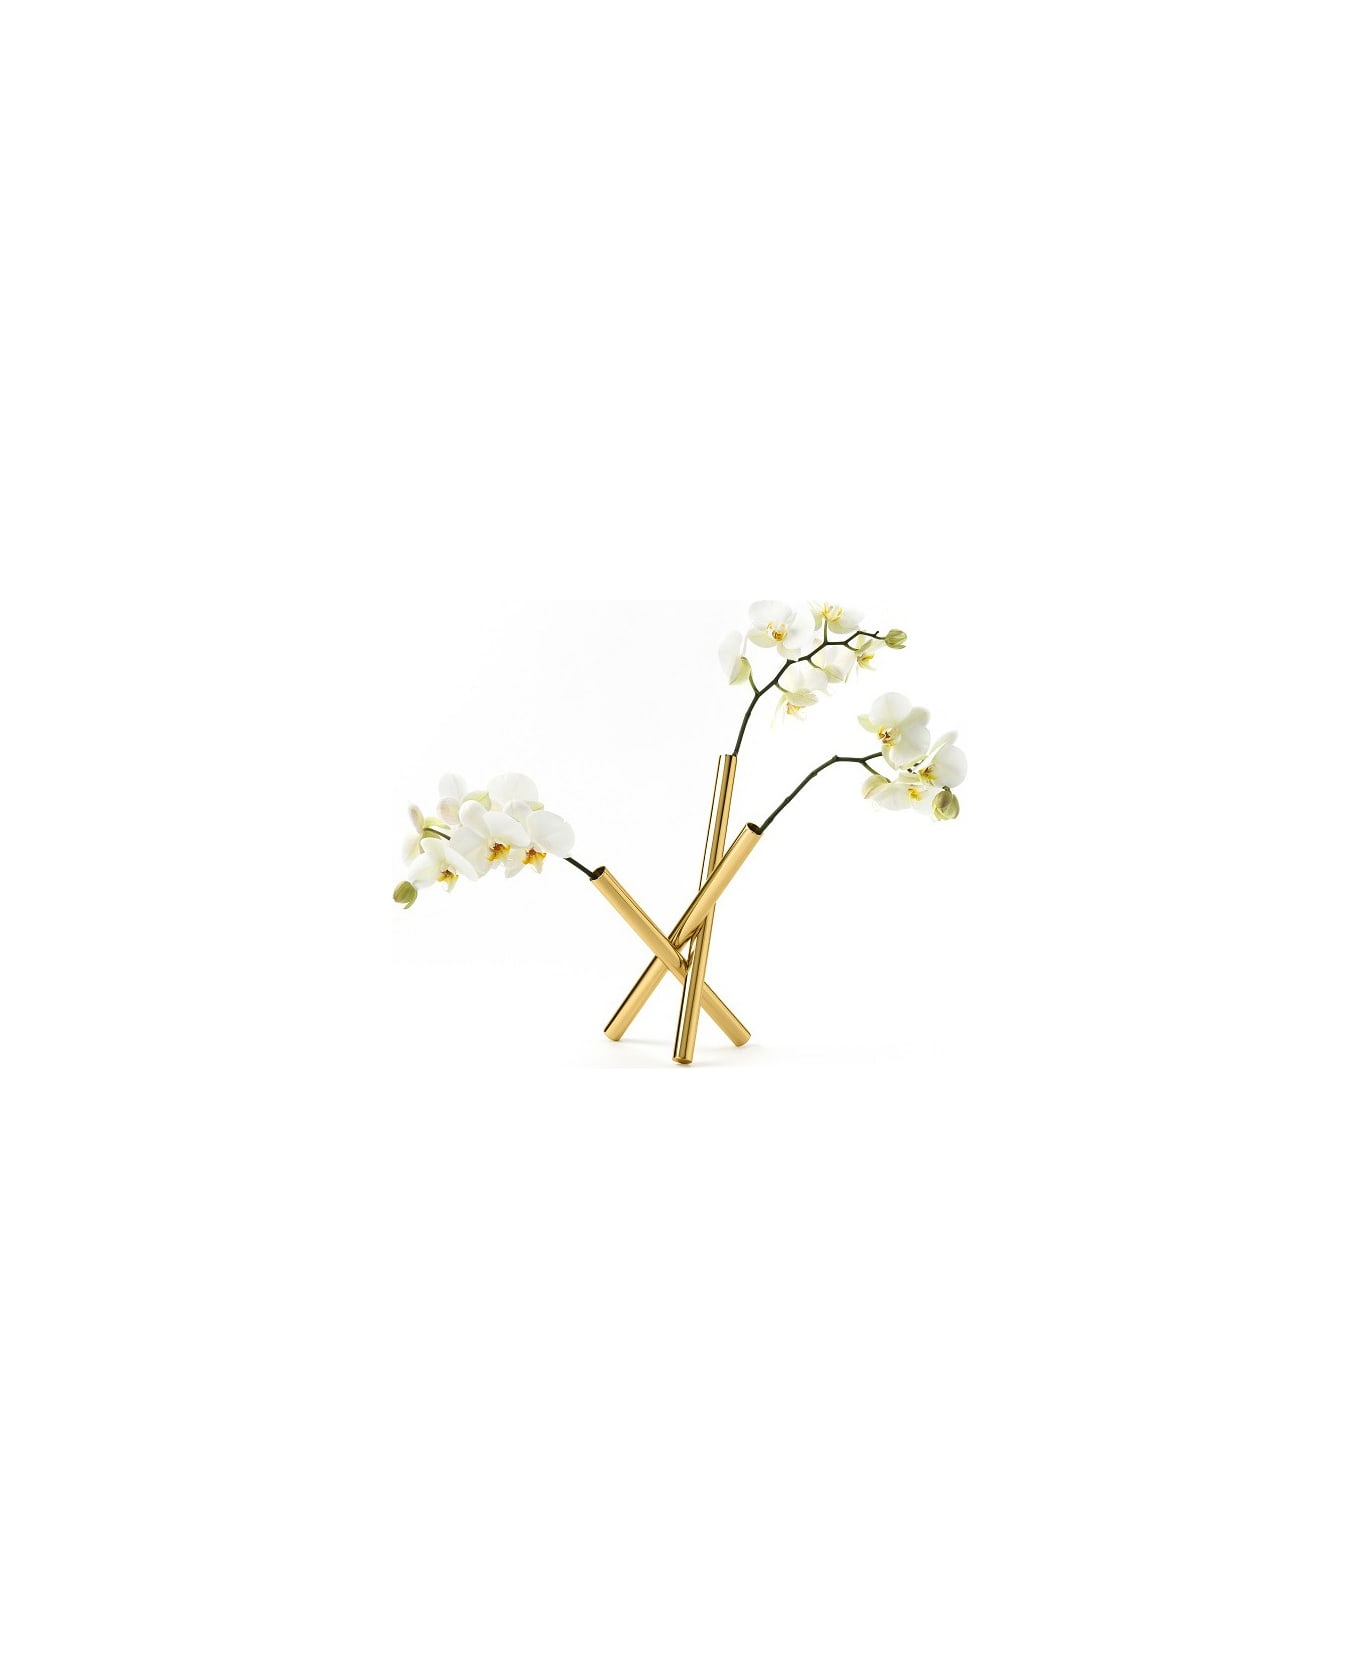 Ghidini 1961 Sticks - Flowers Pot Polished Brass - Polished brass